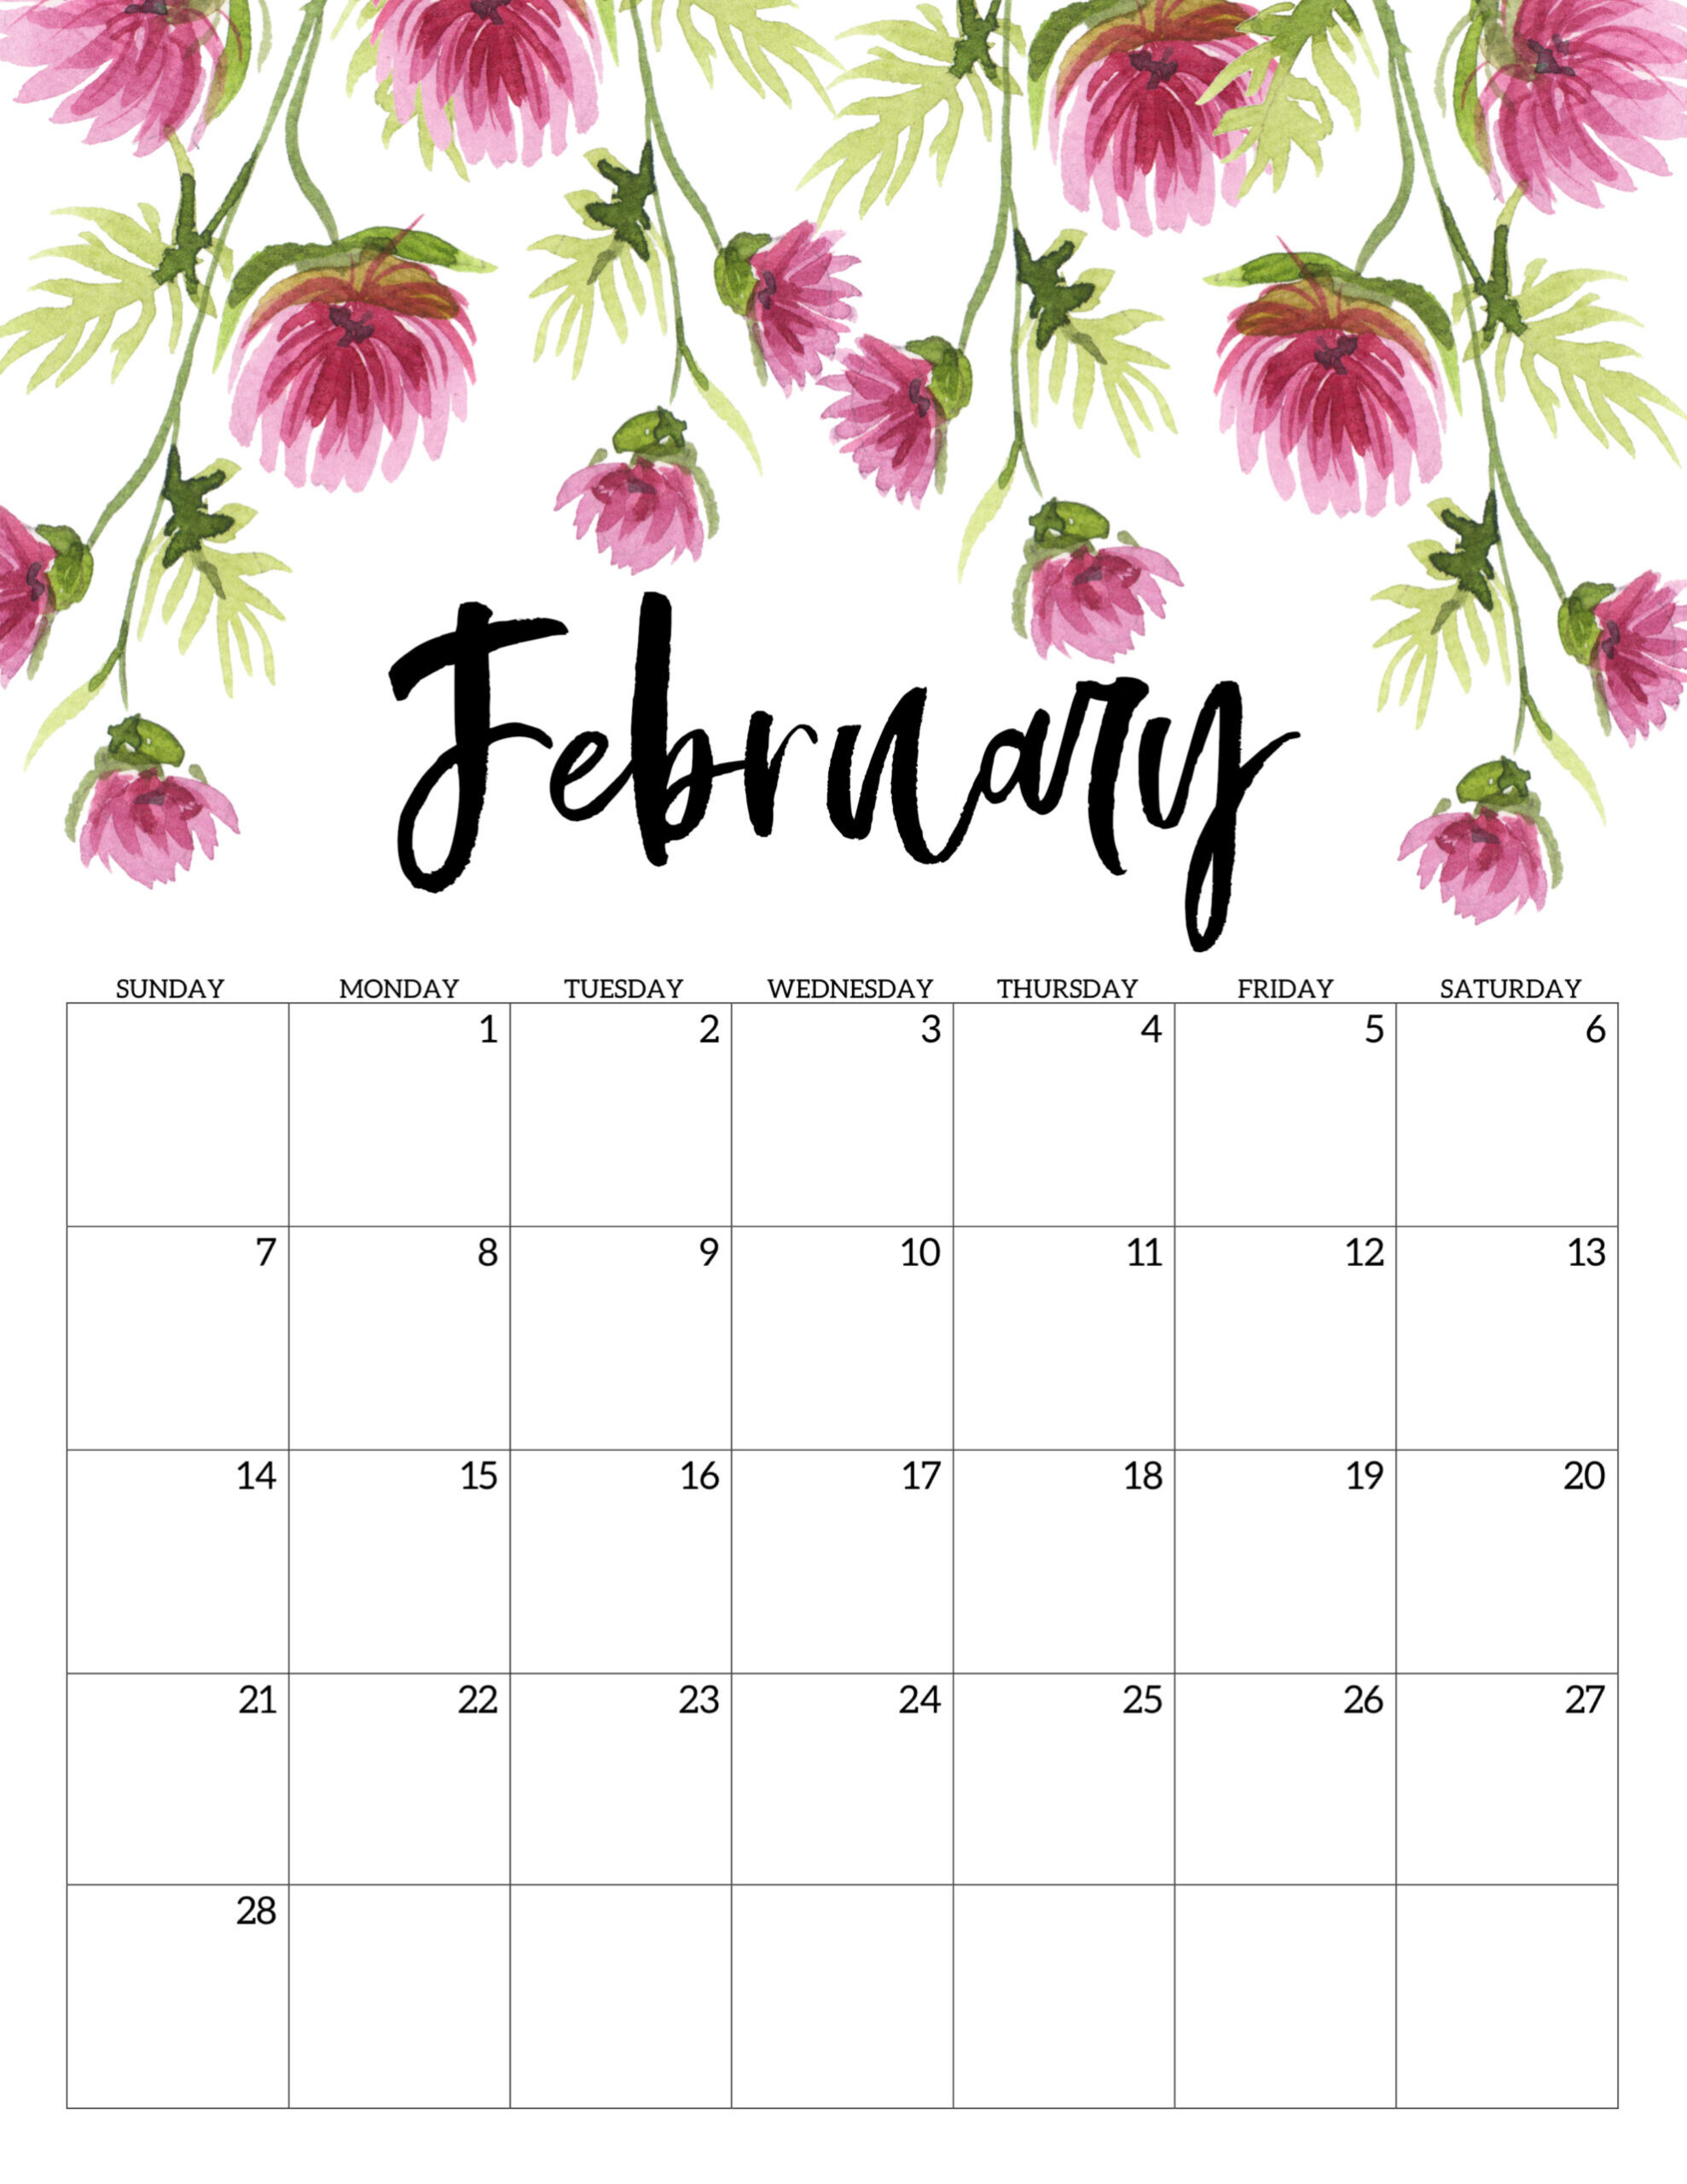 February 2021 Calendar For Kids | Calendar 2021